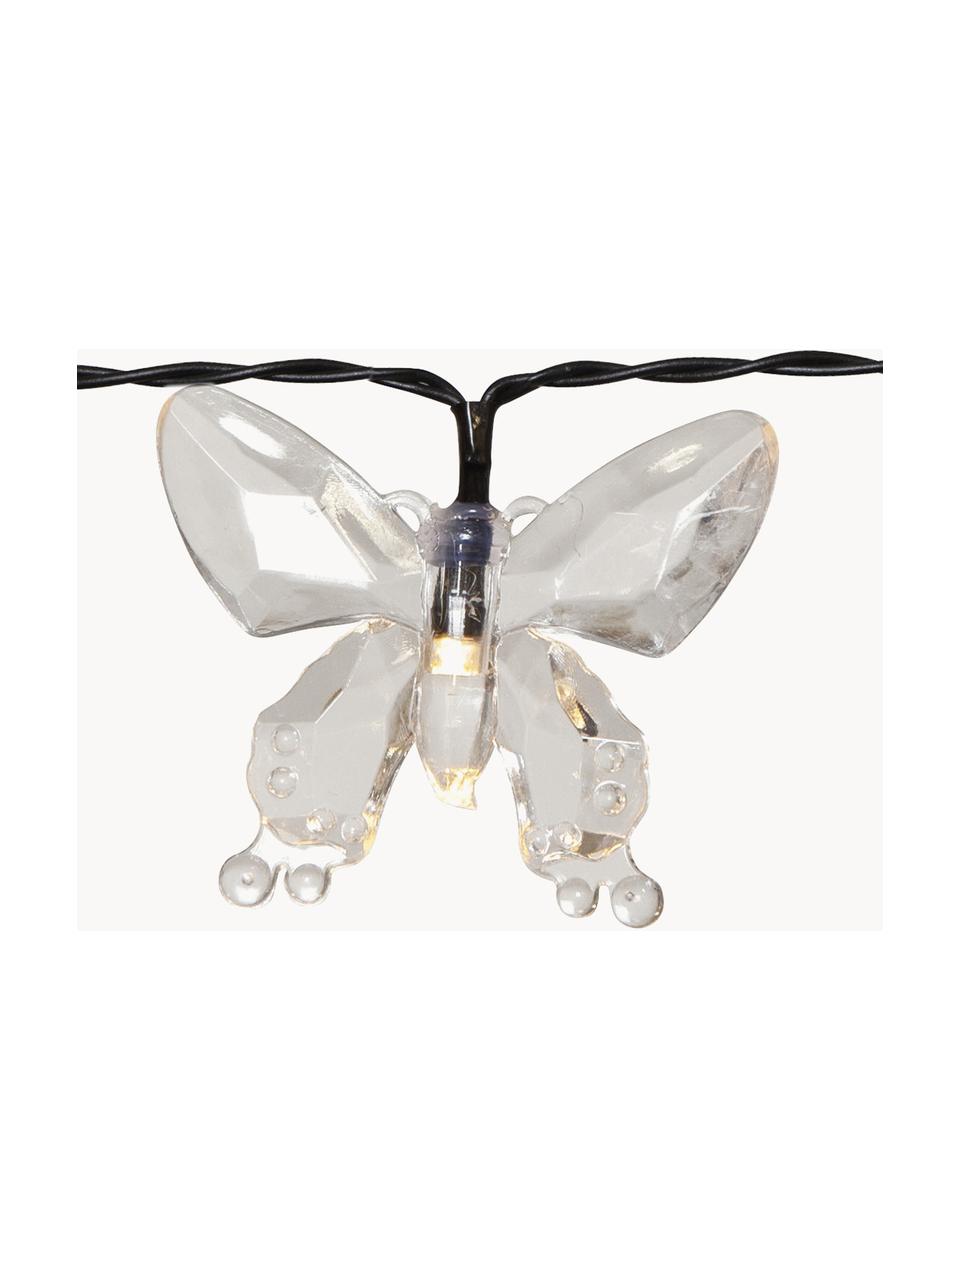 Solarna girlanda świetlna Papillon, 280 cm, Transparentny, D 280 cm